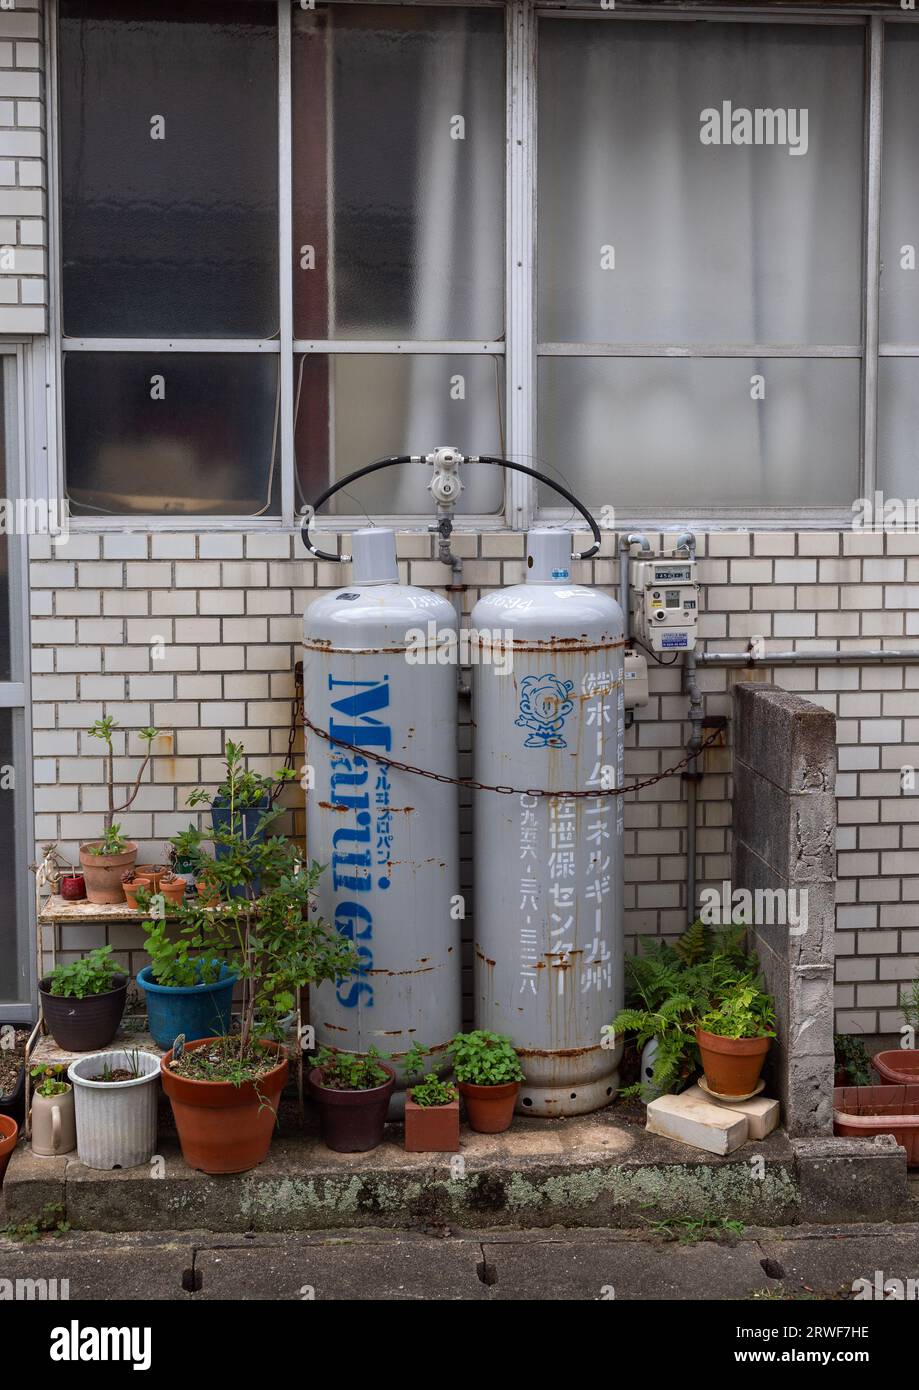 Bombole di gas Maruigas per cucinare fuori da una casa, regione di Kyushu, Arita, Giappone Foto Stock